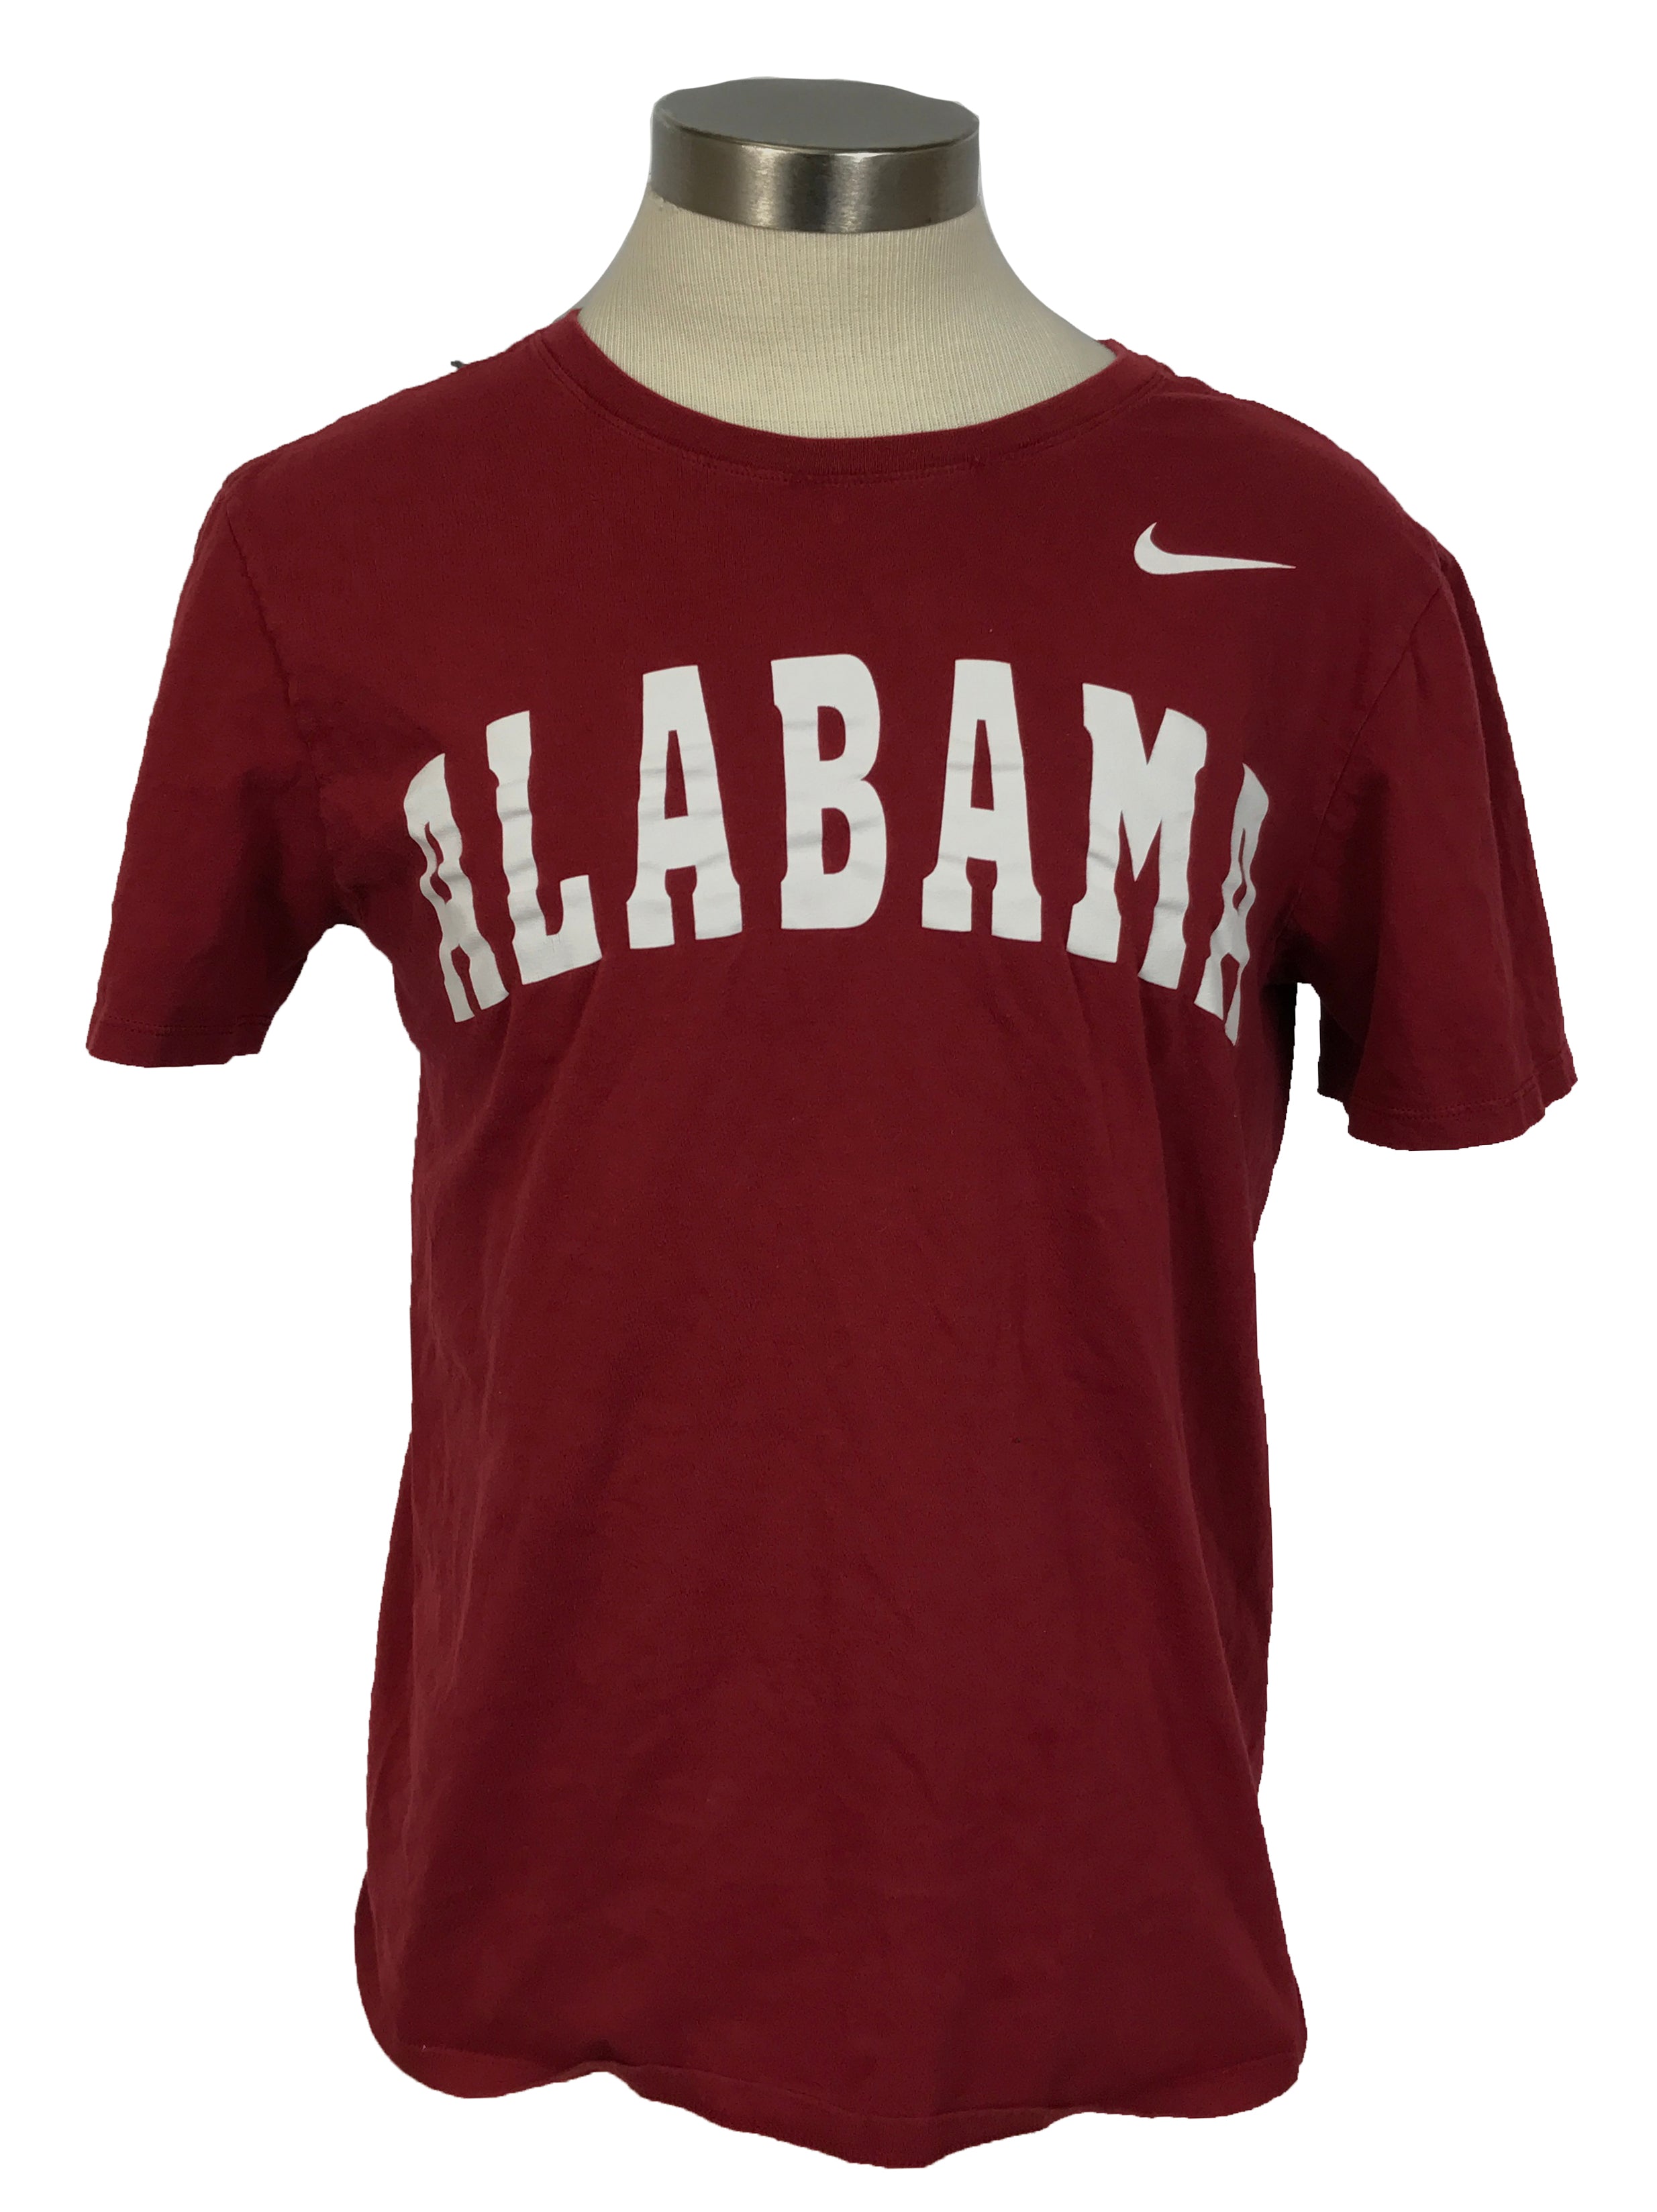 Nike Tee Red Alabama T-Shirt Unisex Size M